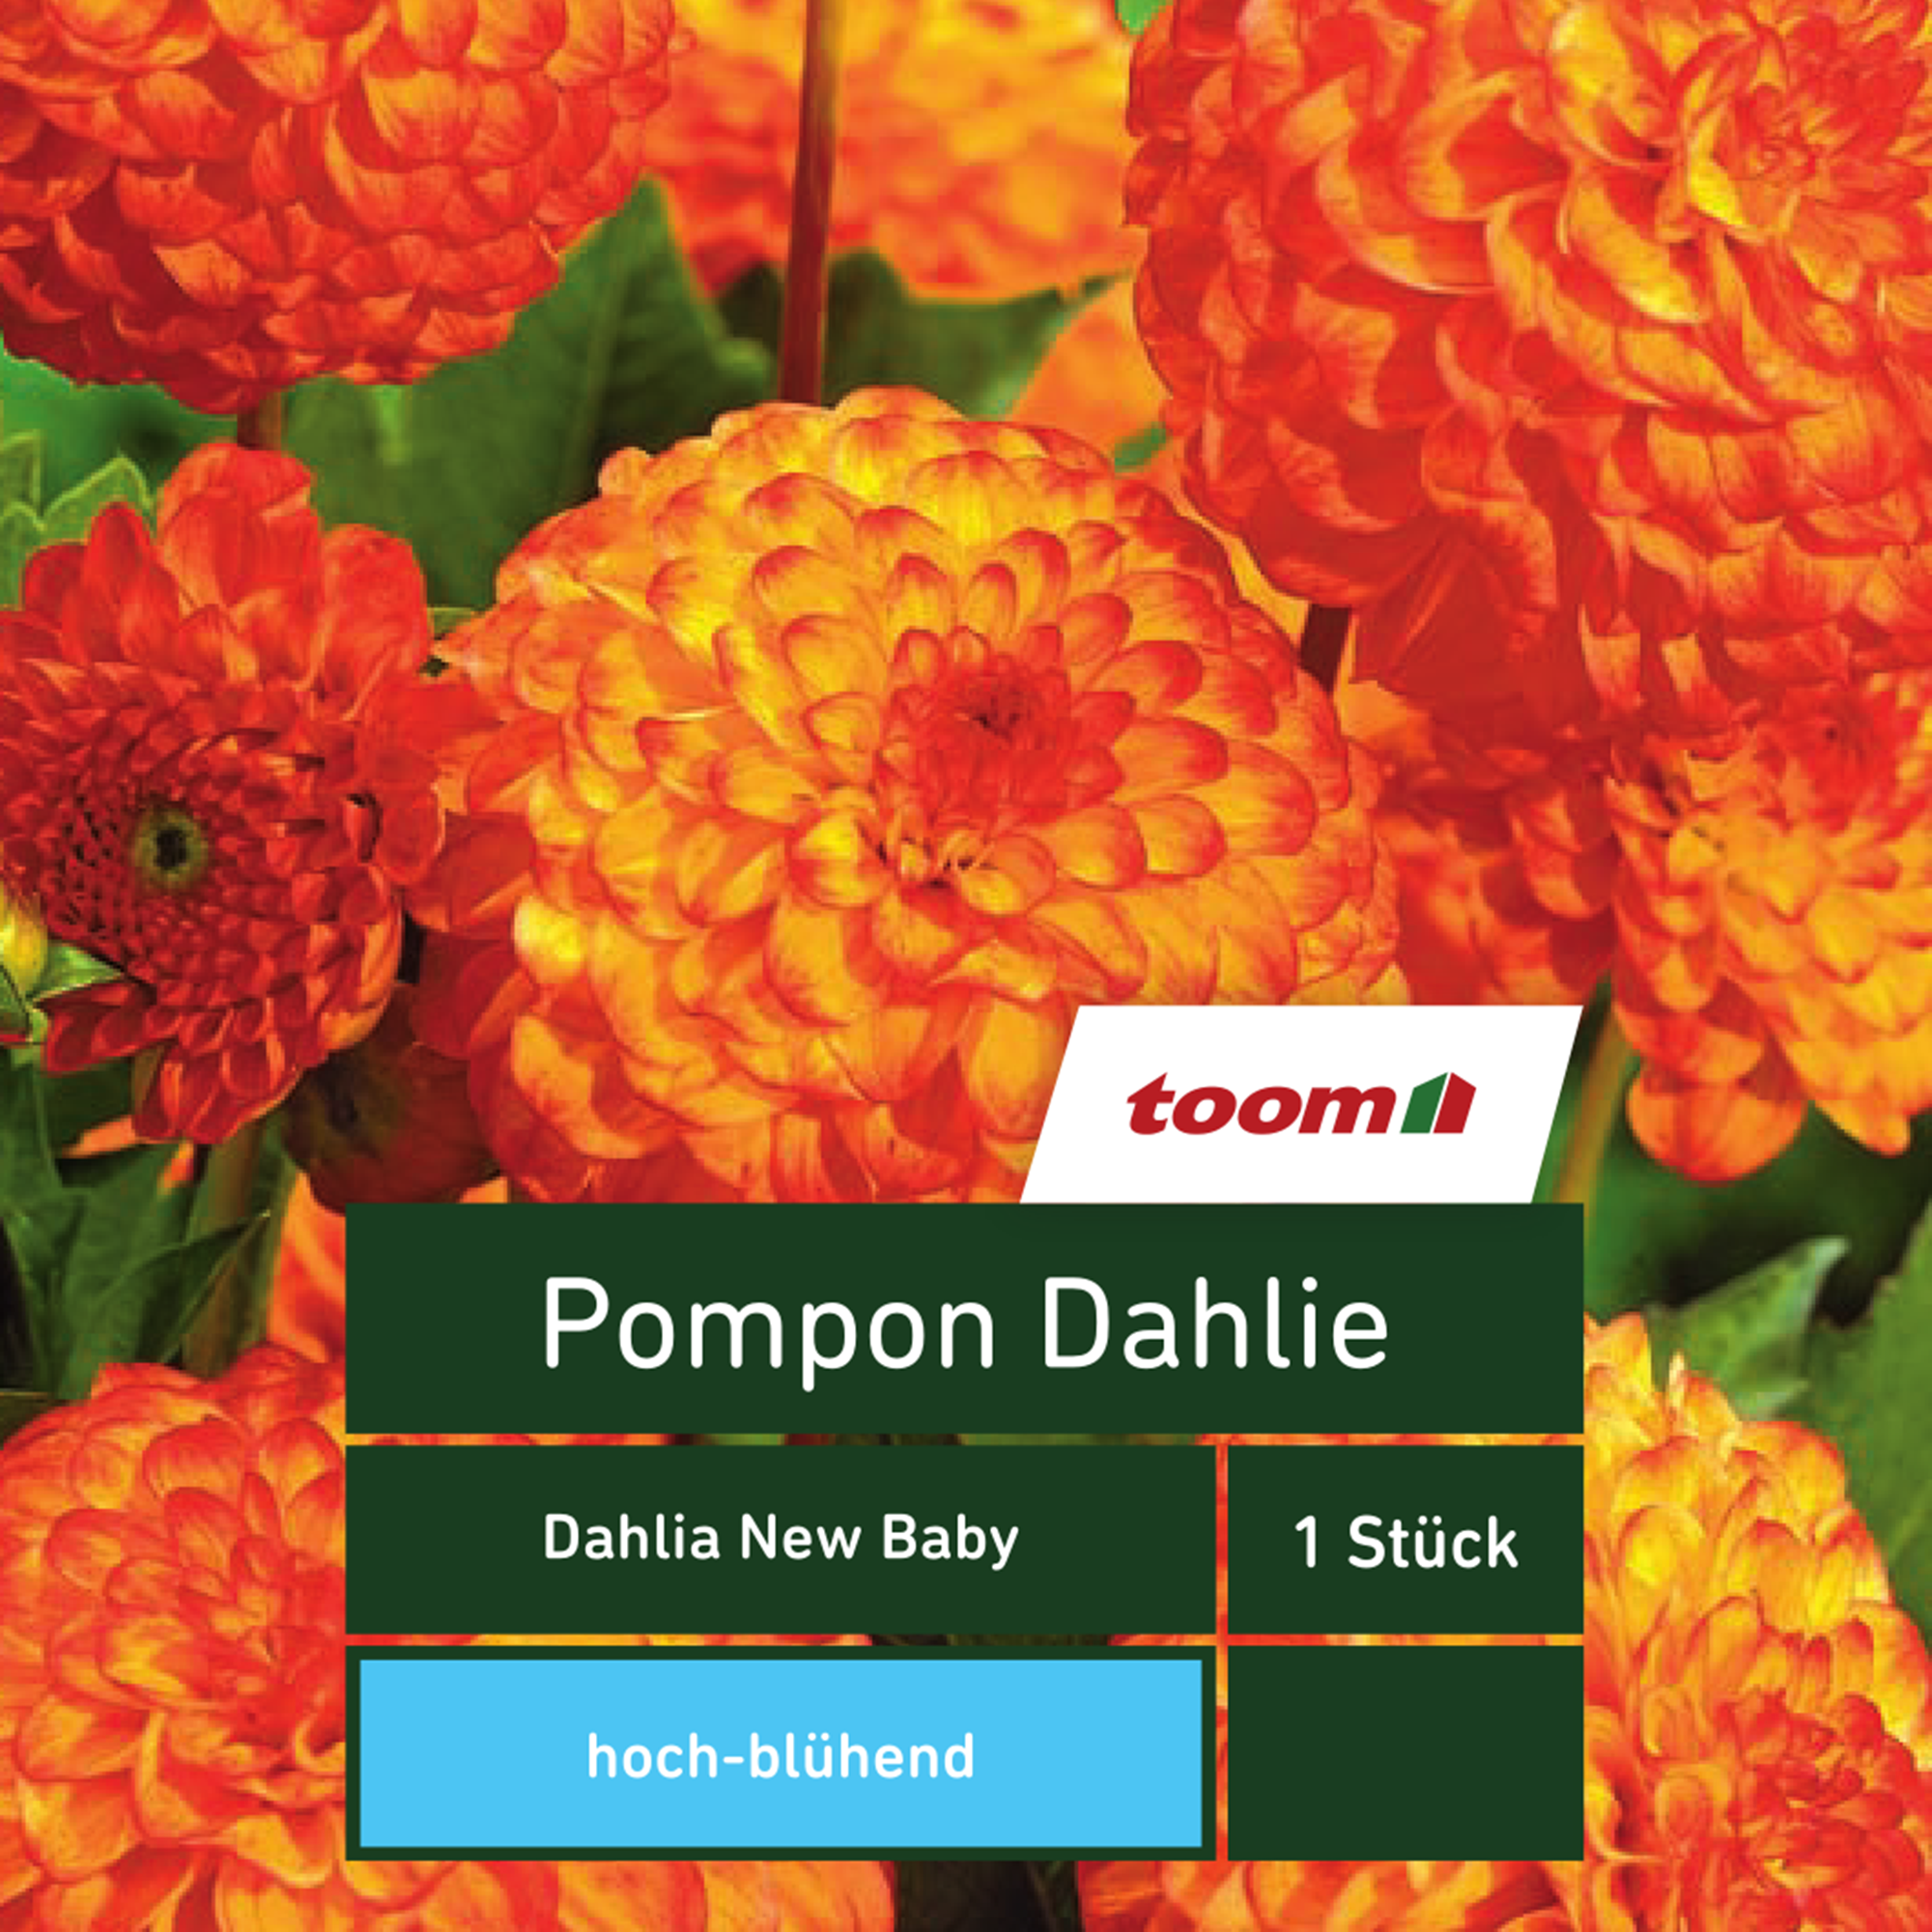 Pompon-Dahlie 'Dahlia New Baby', 1 Stück, orange-gelb + product picture